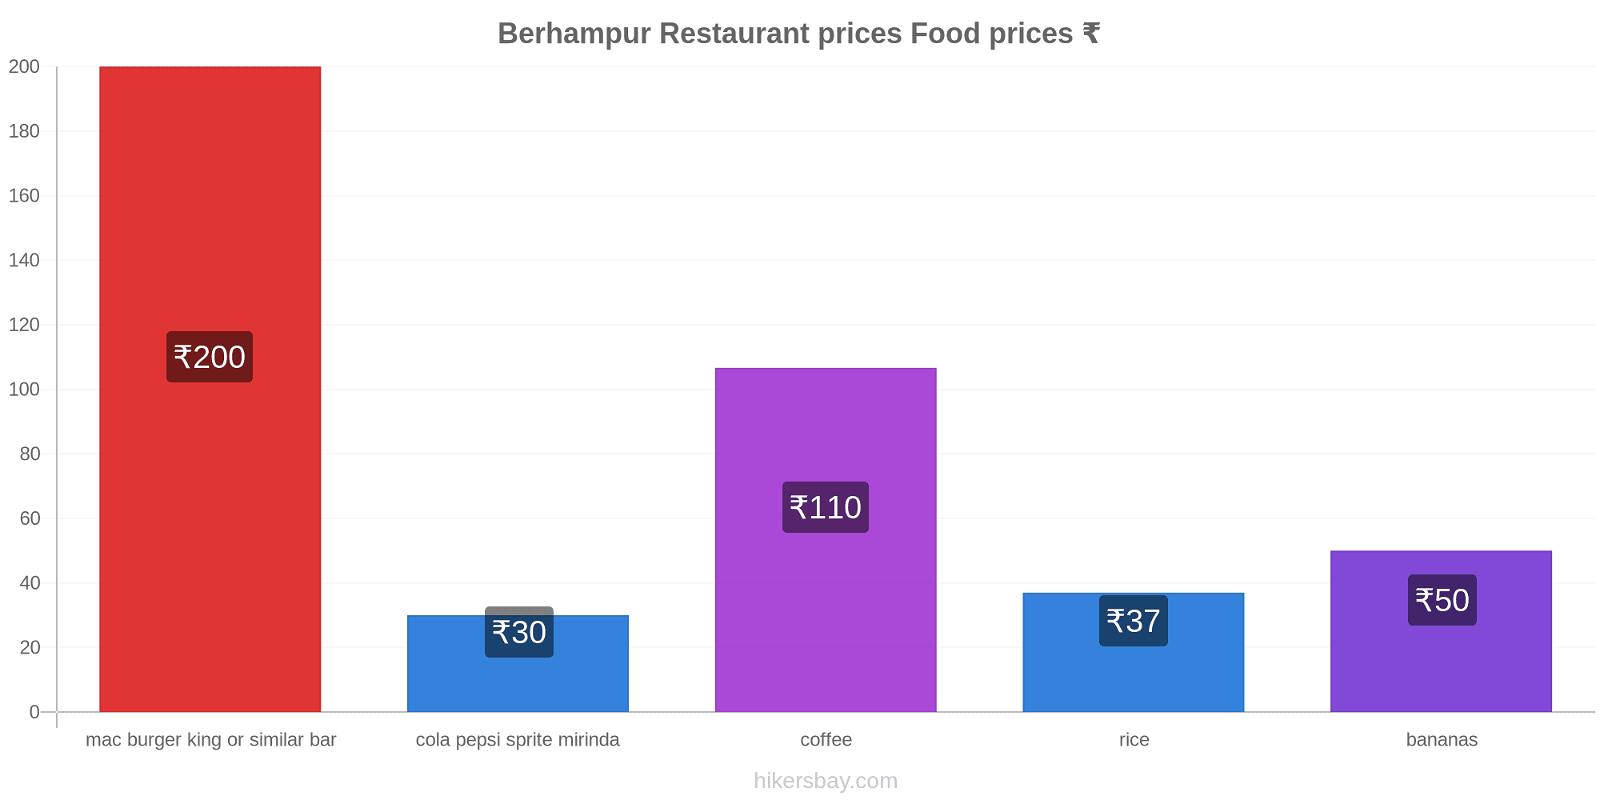 Berhampur price changes hikersbay.com